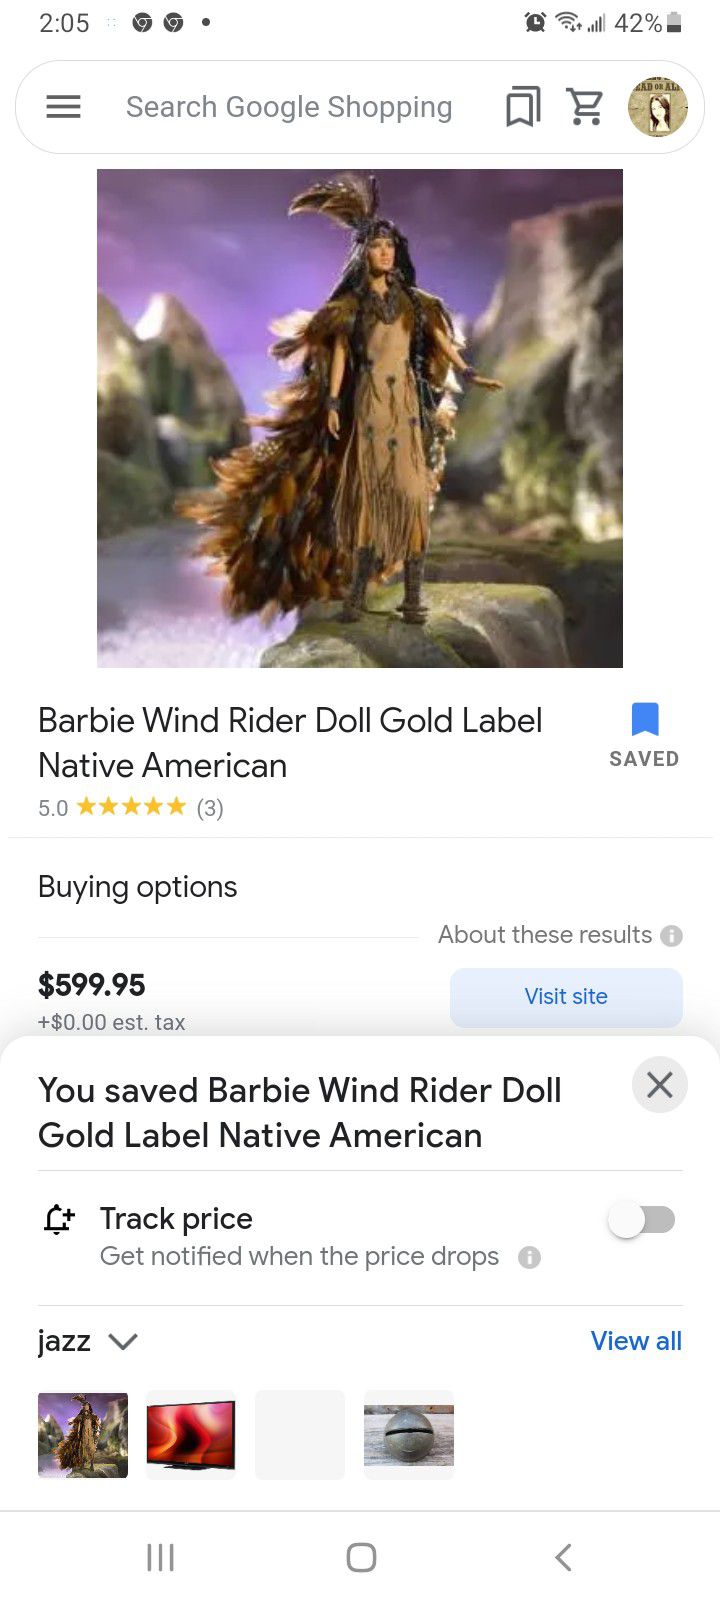 Barbie Wind Rider Doll Gold Label Native American